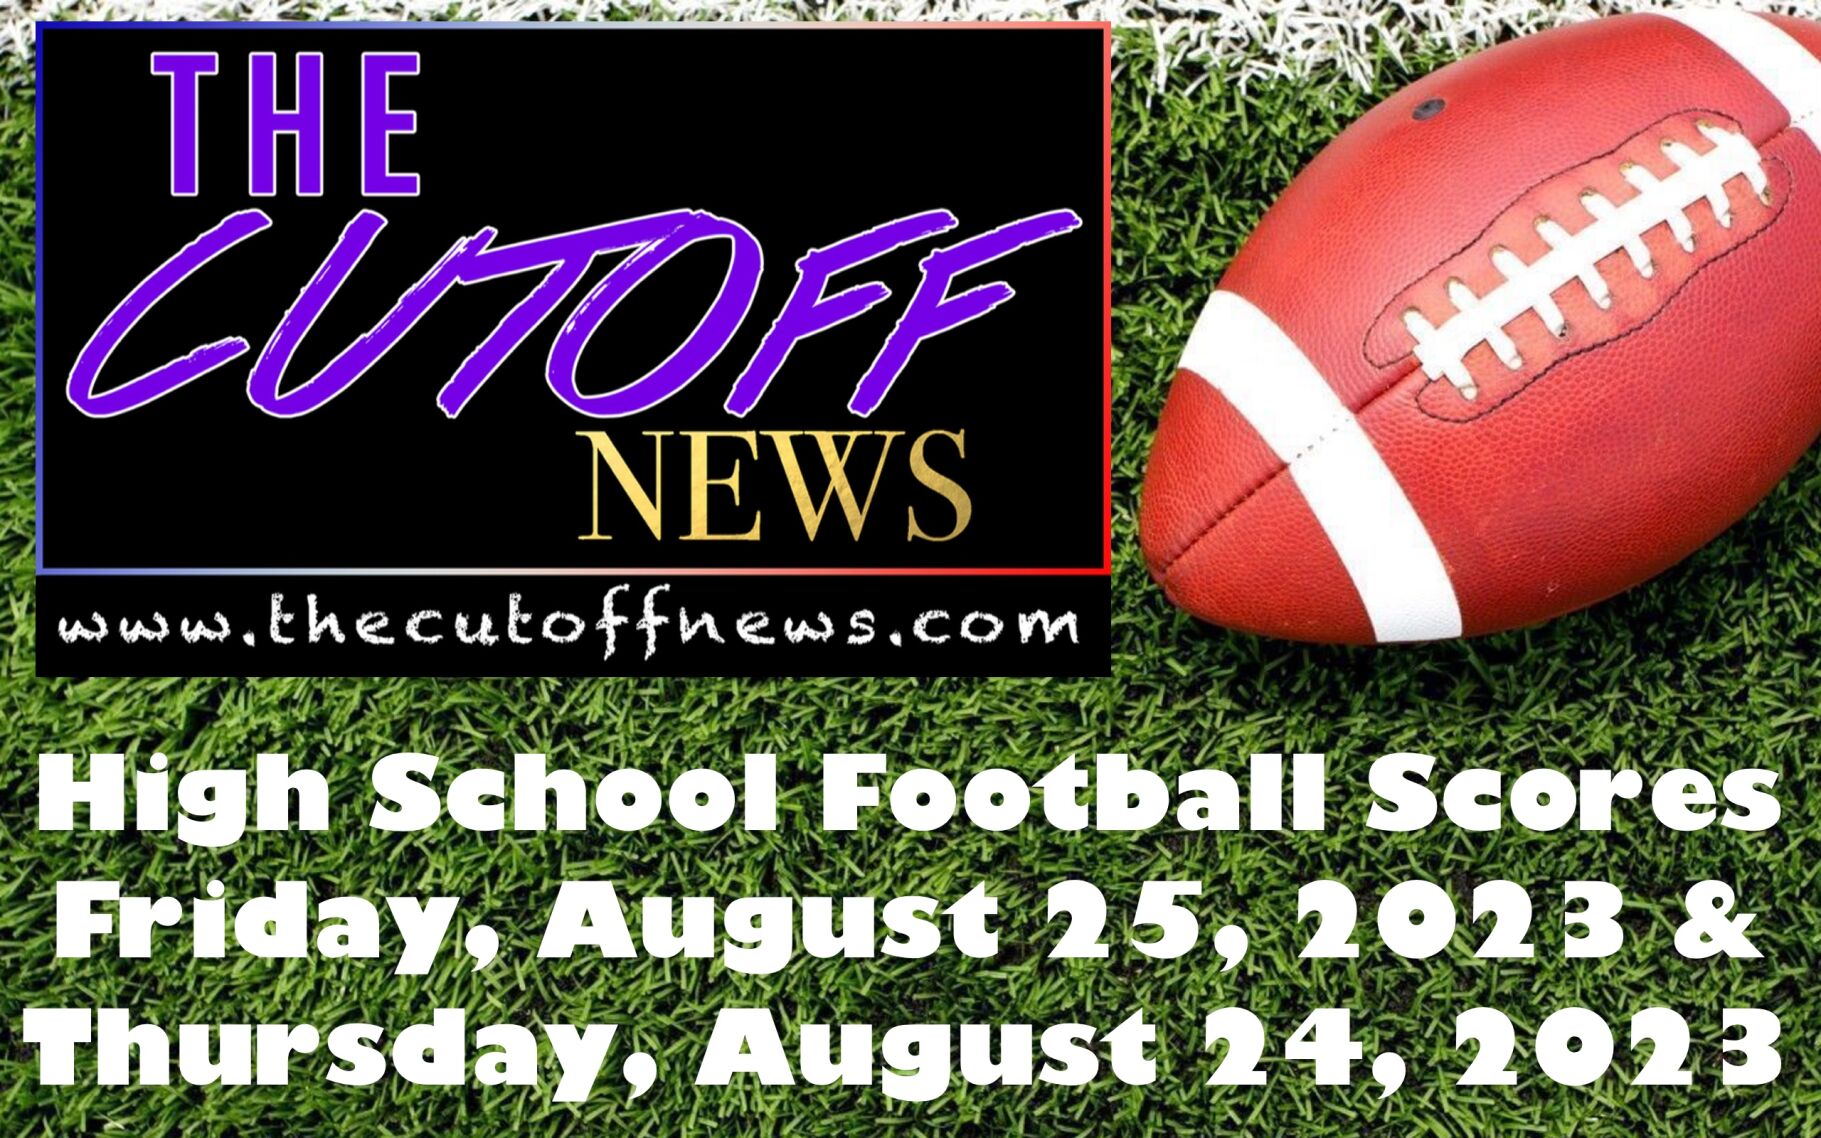 High School Football Scores Friday, August 25, 2023 and Thursday, August 24, 2023.jpg  thecutoffnews